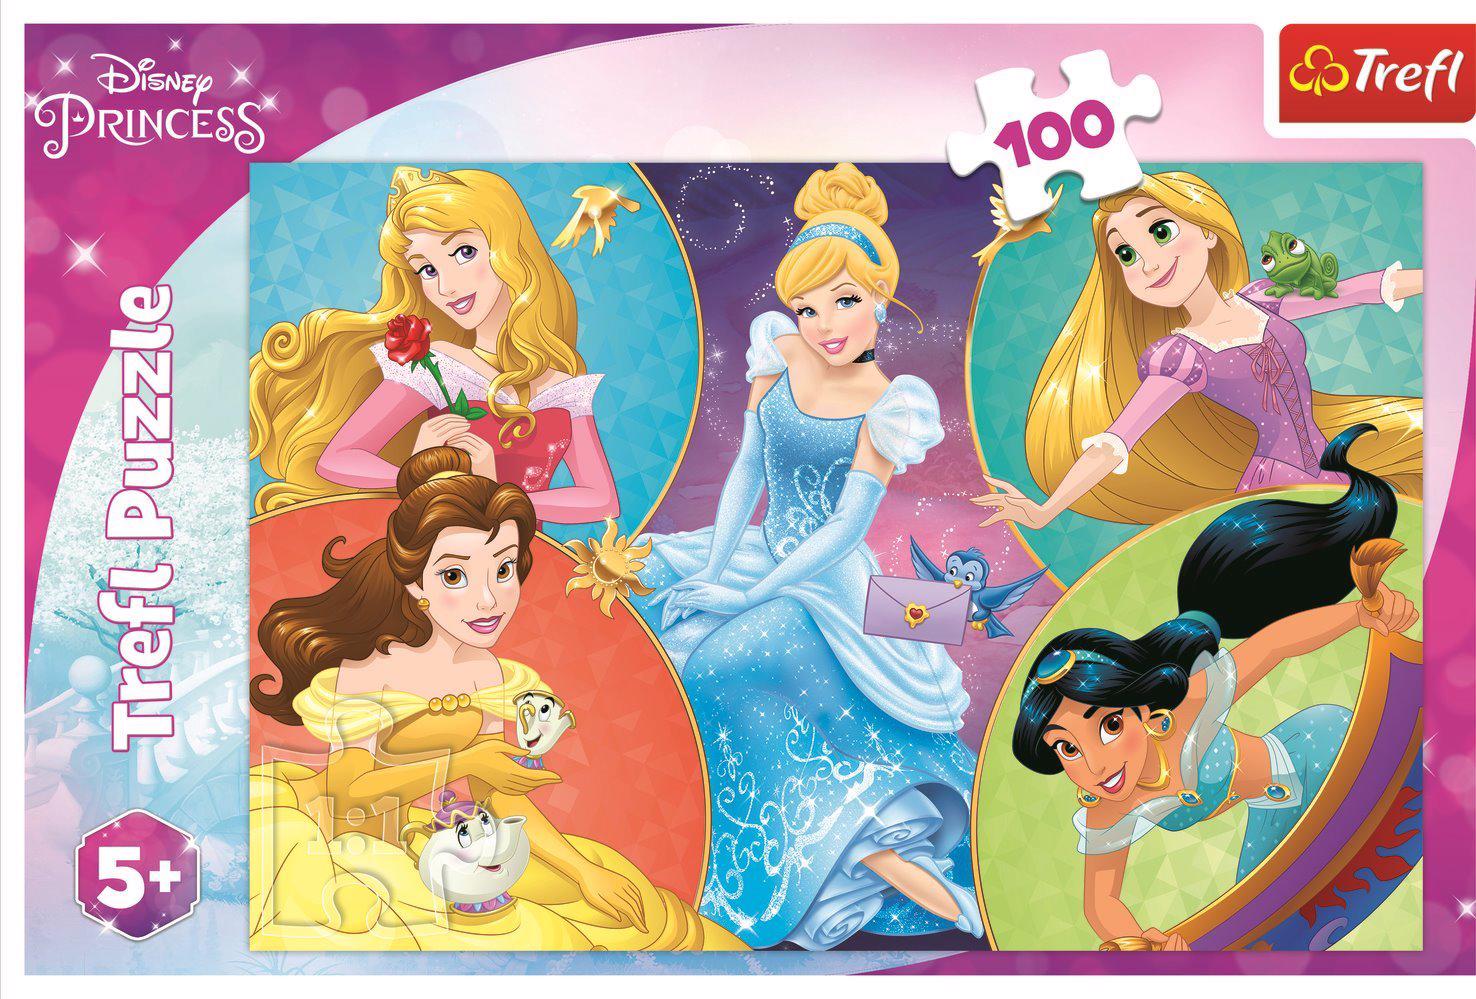 Disney princess: Meet Sweet Princesses 100